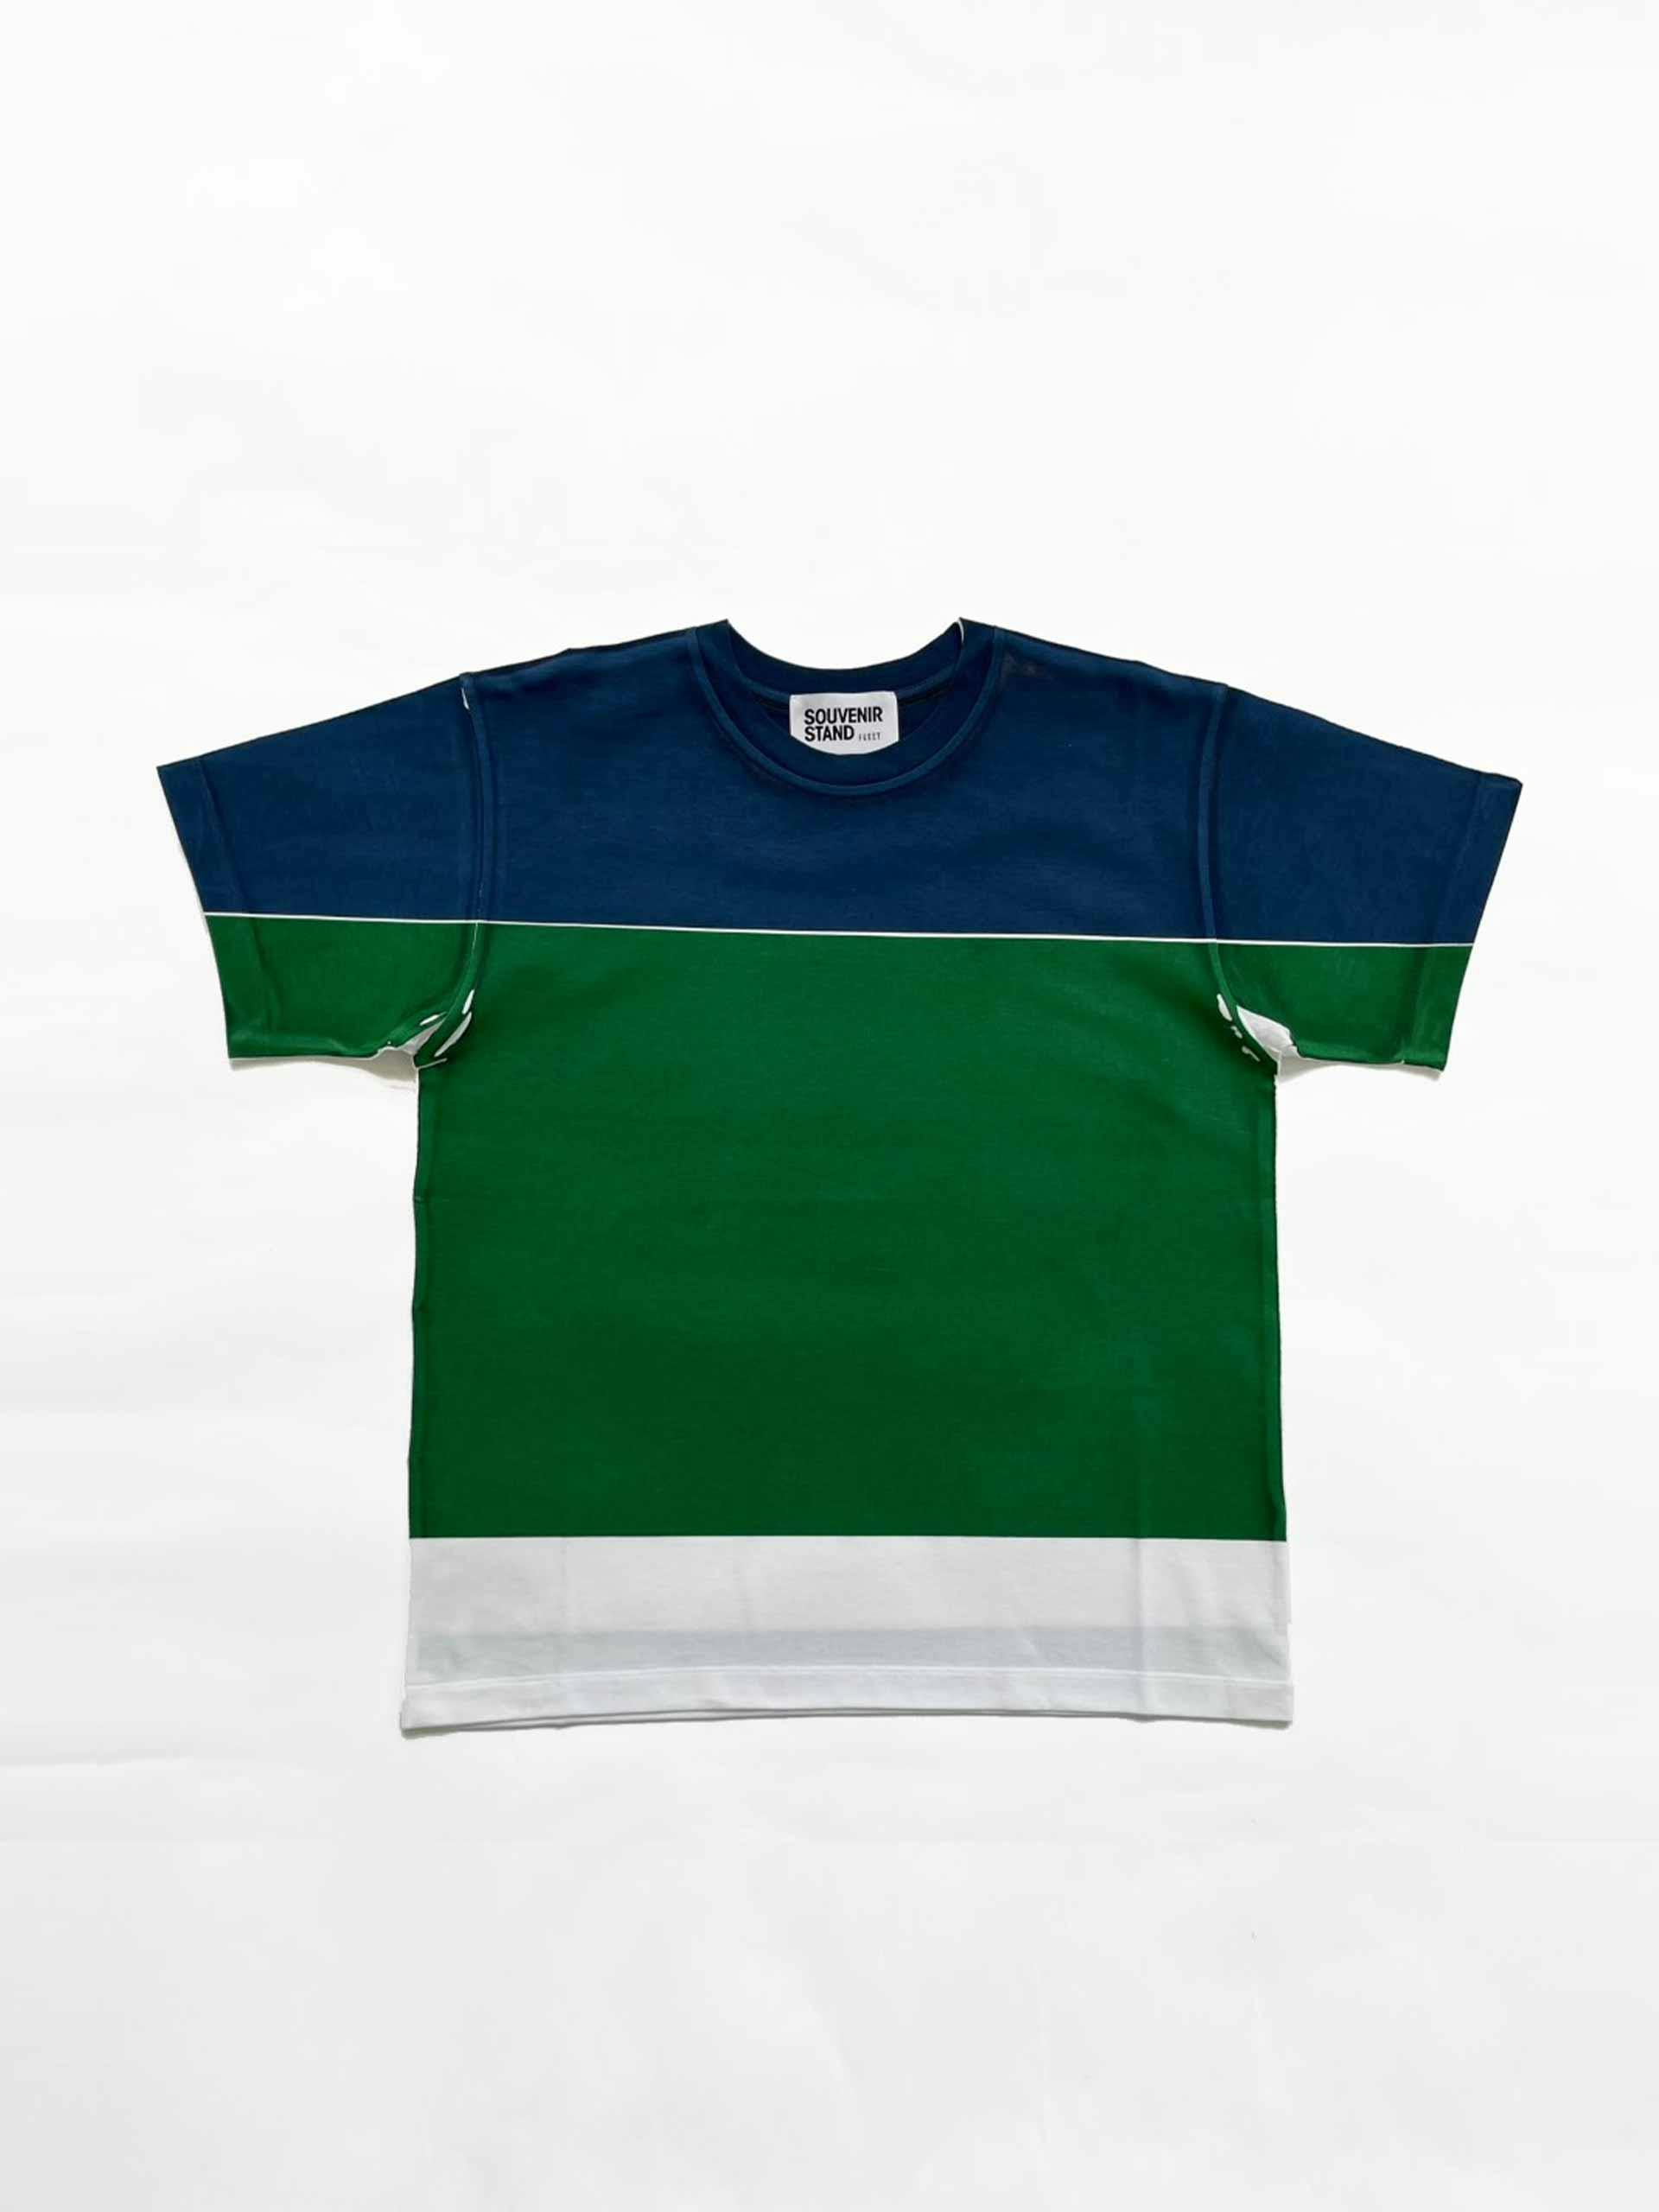 Green and blue tshirt